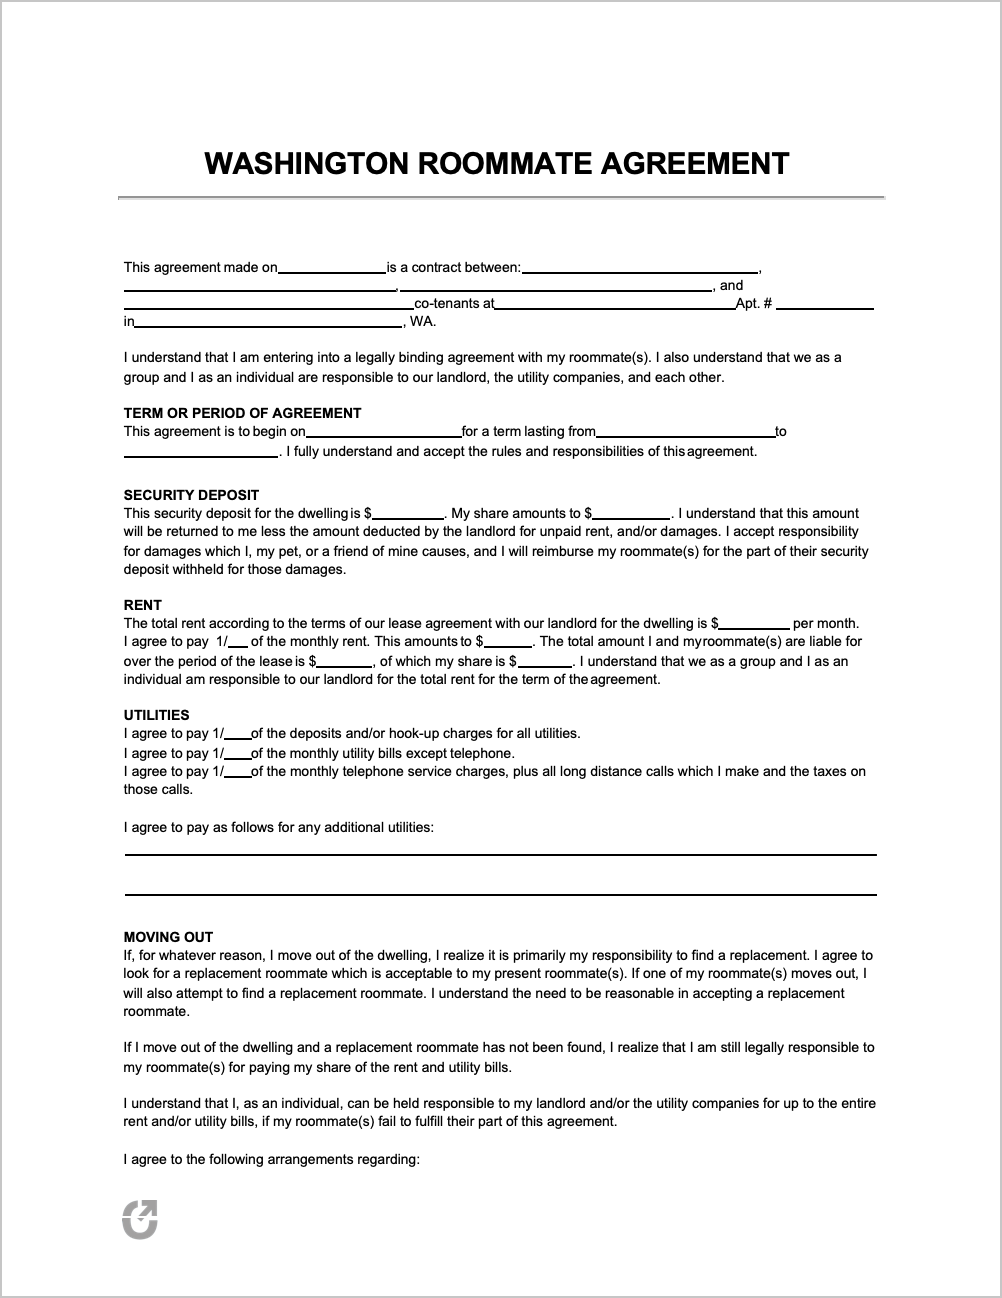 free-washington-roommate-agreement-pdf-word